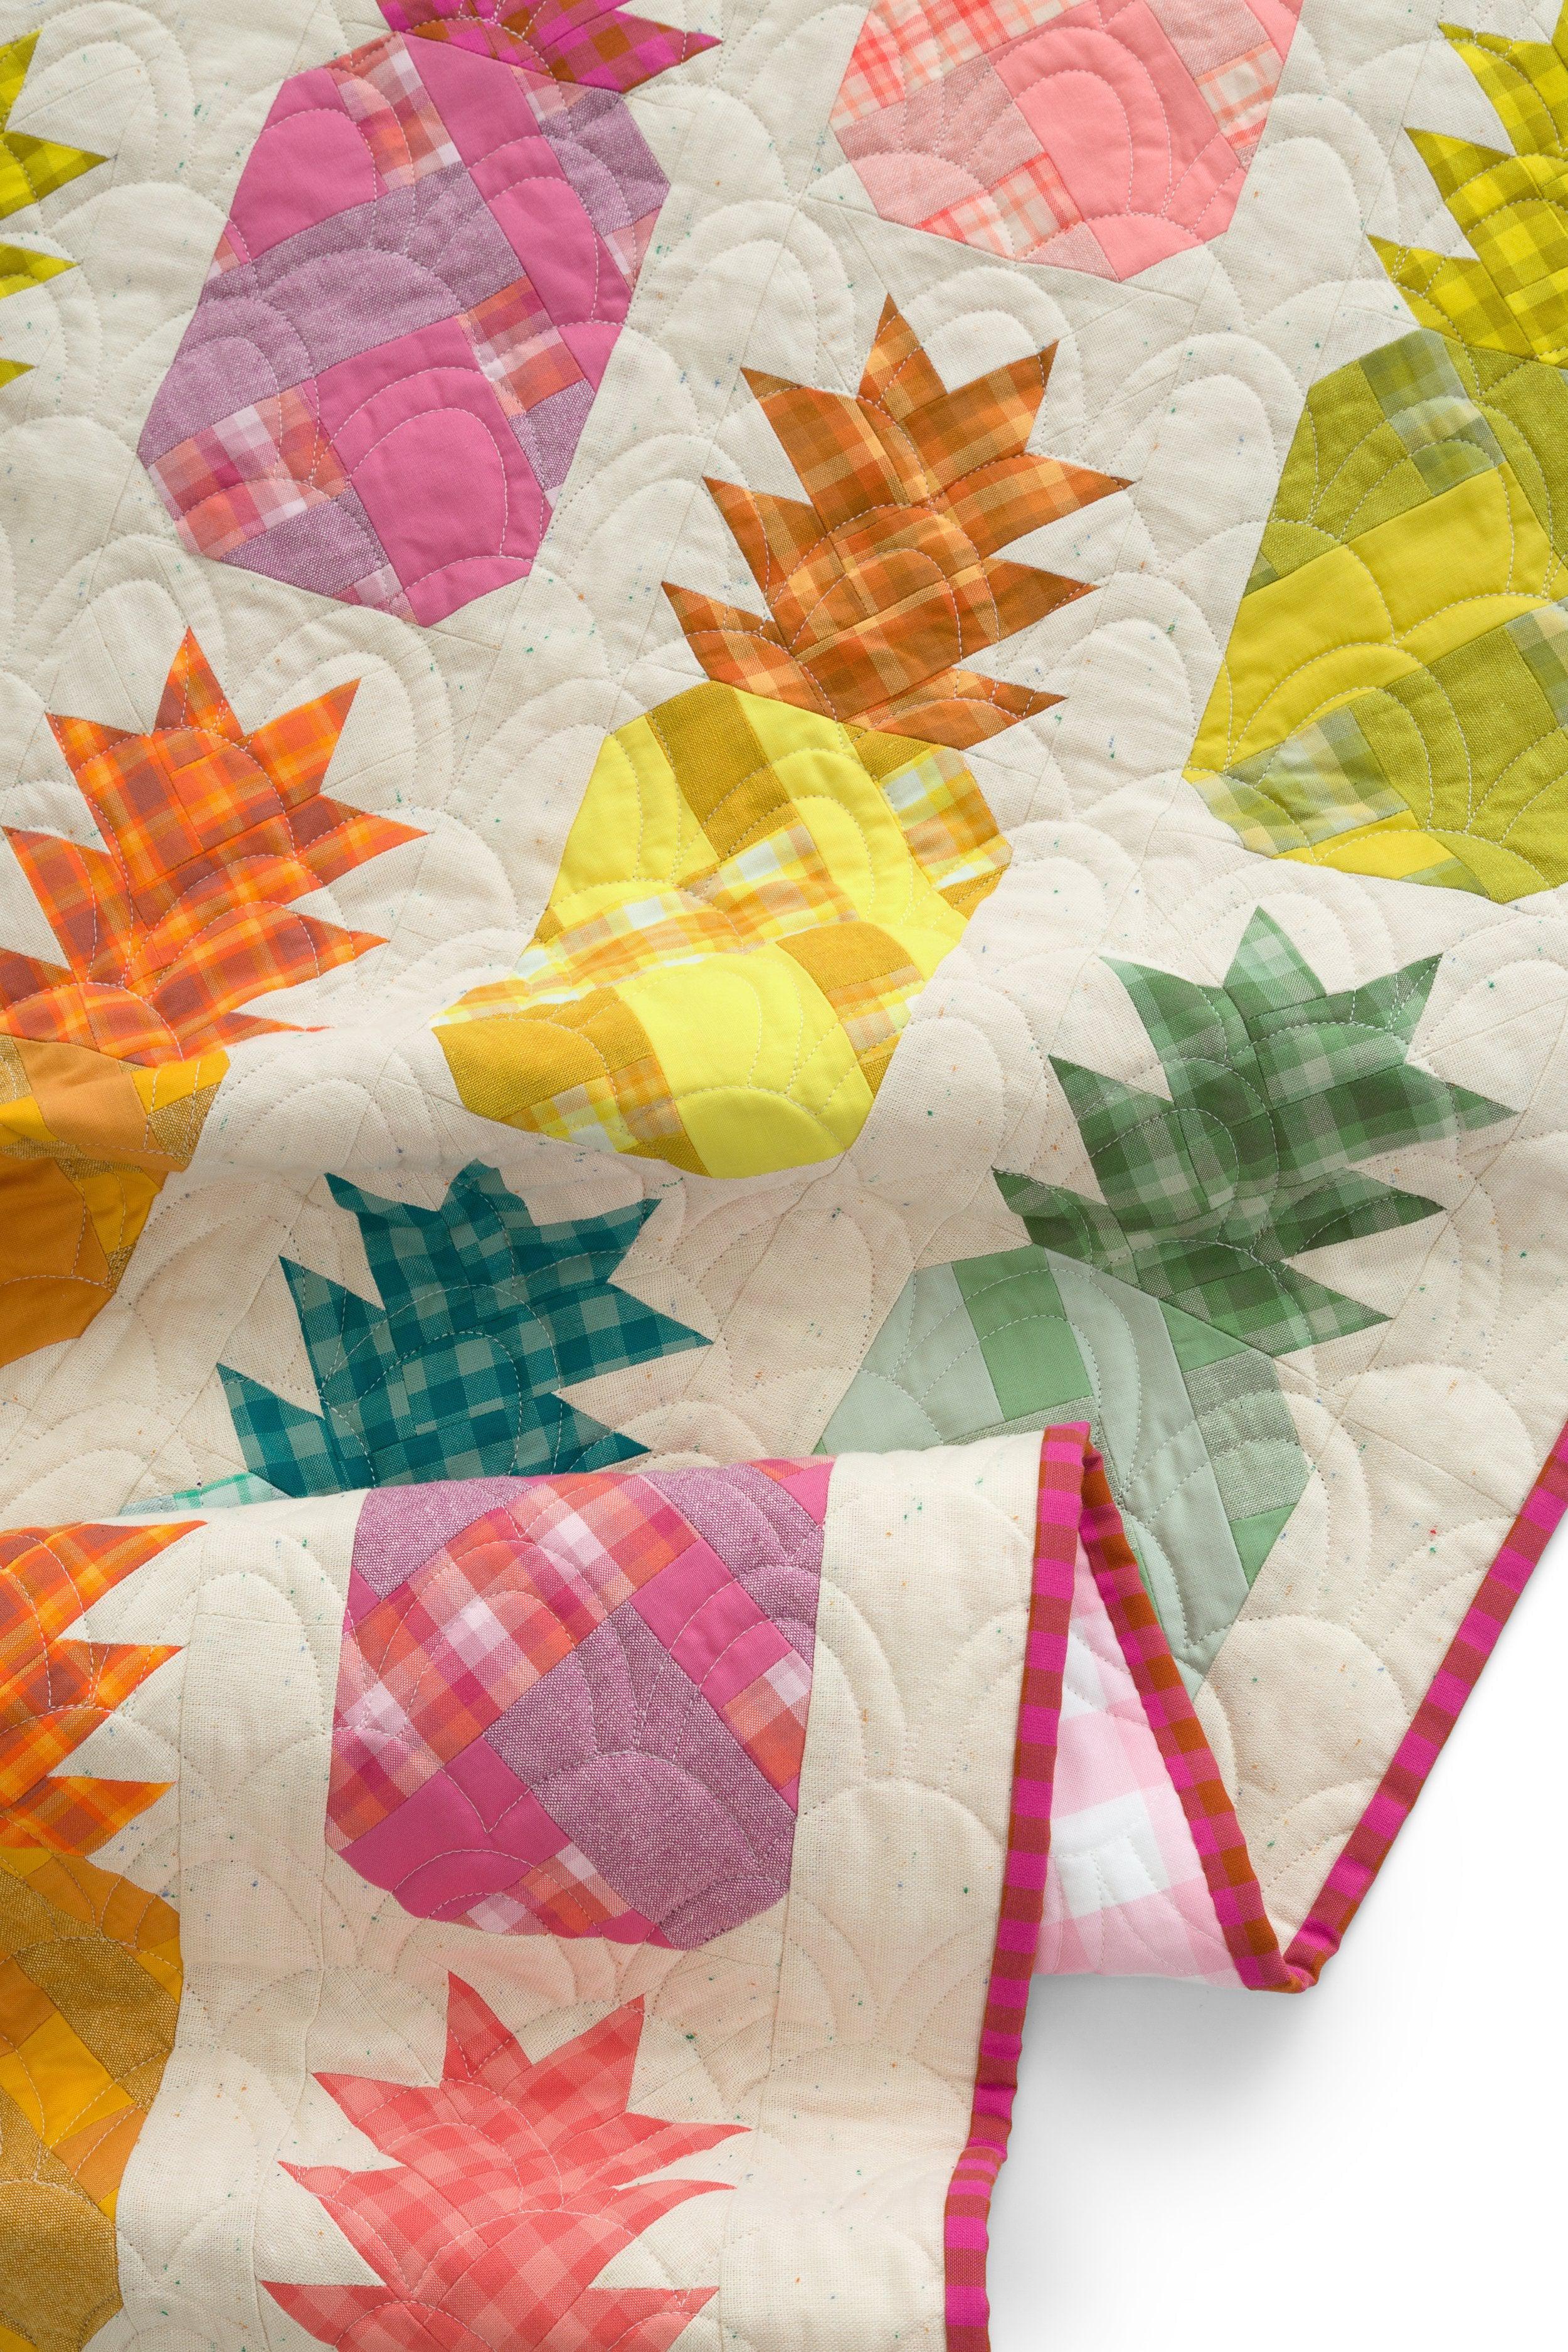 Pineapple Farm Quilt Kit-Robert Kaufman-My Favorite Quilt Store